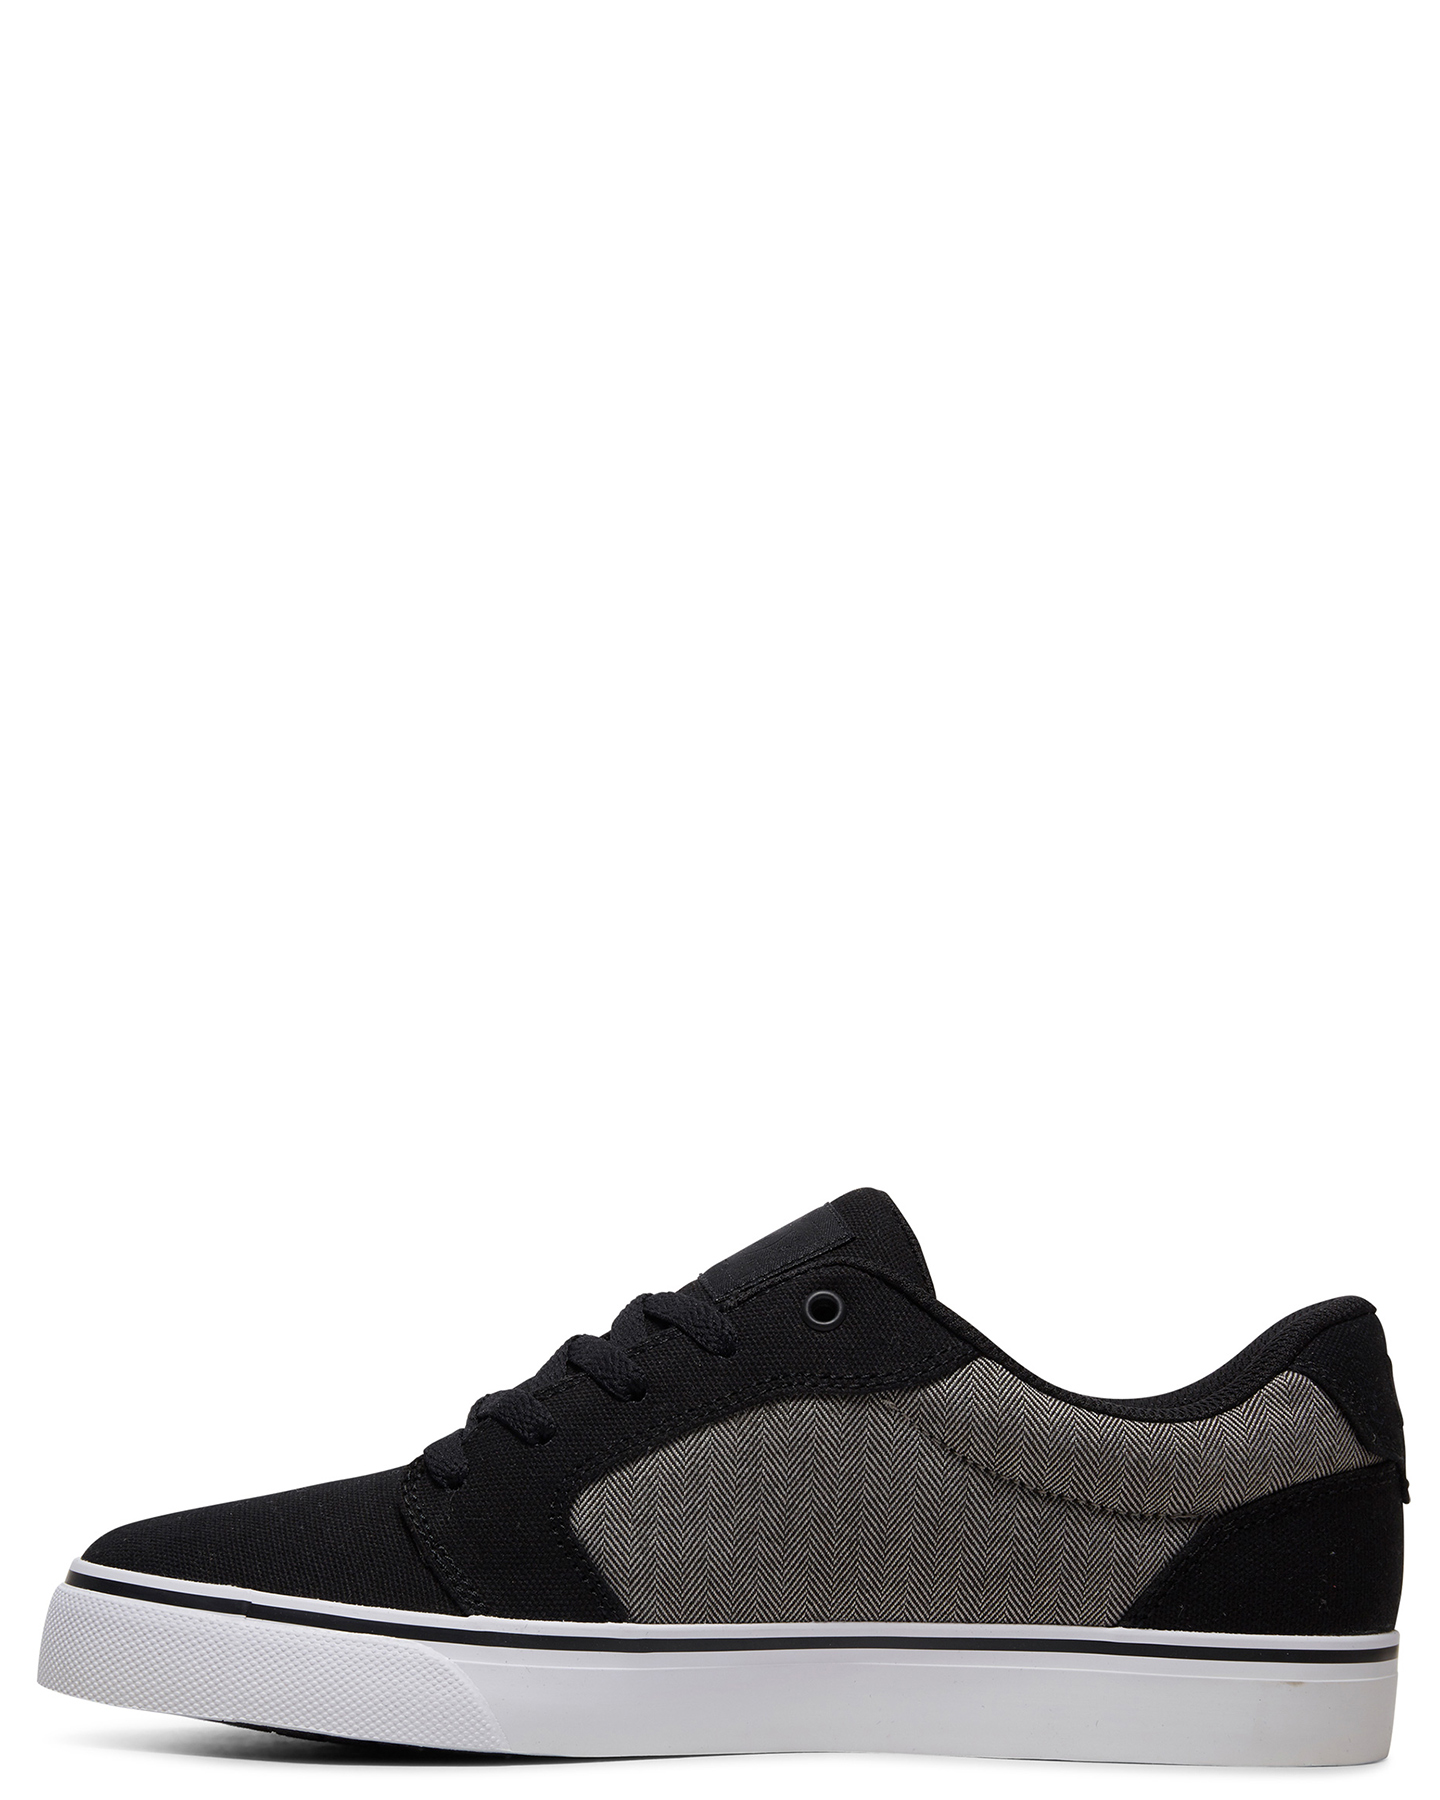 Dc Shoes Mens Anvil Tx Se Shoe - Black/Herringbone | SurfStitch